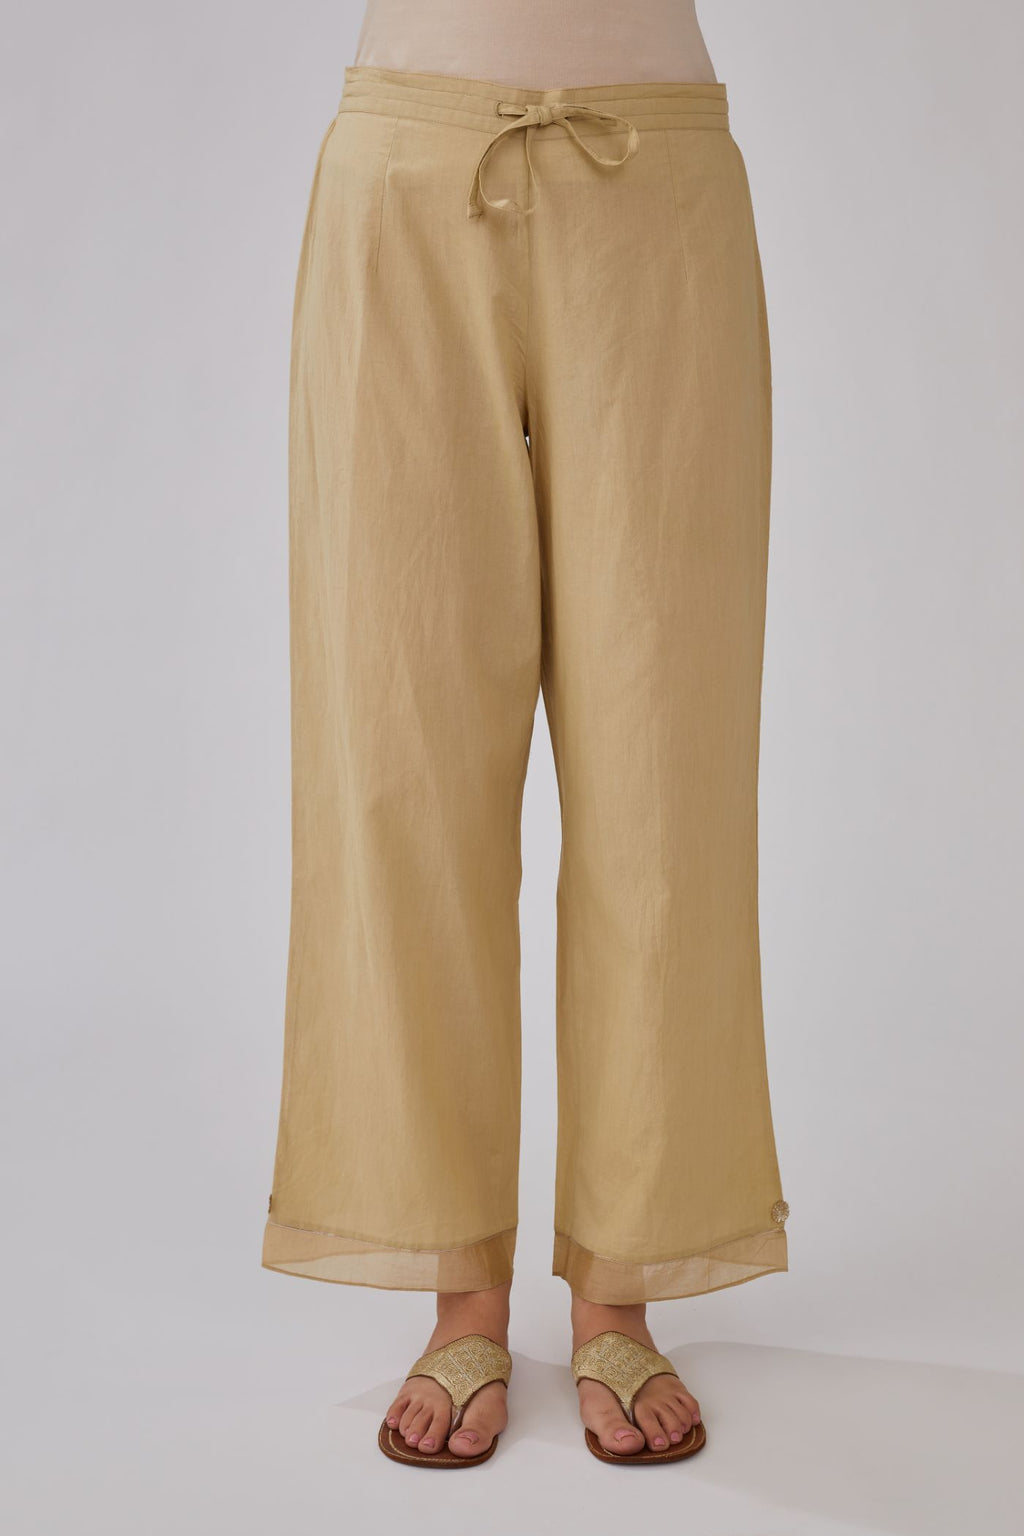 Olive straight pants with gota and silk chanderi fabric detaling at bottom hem